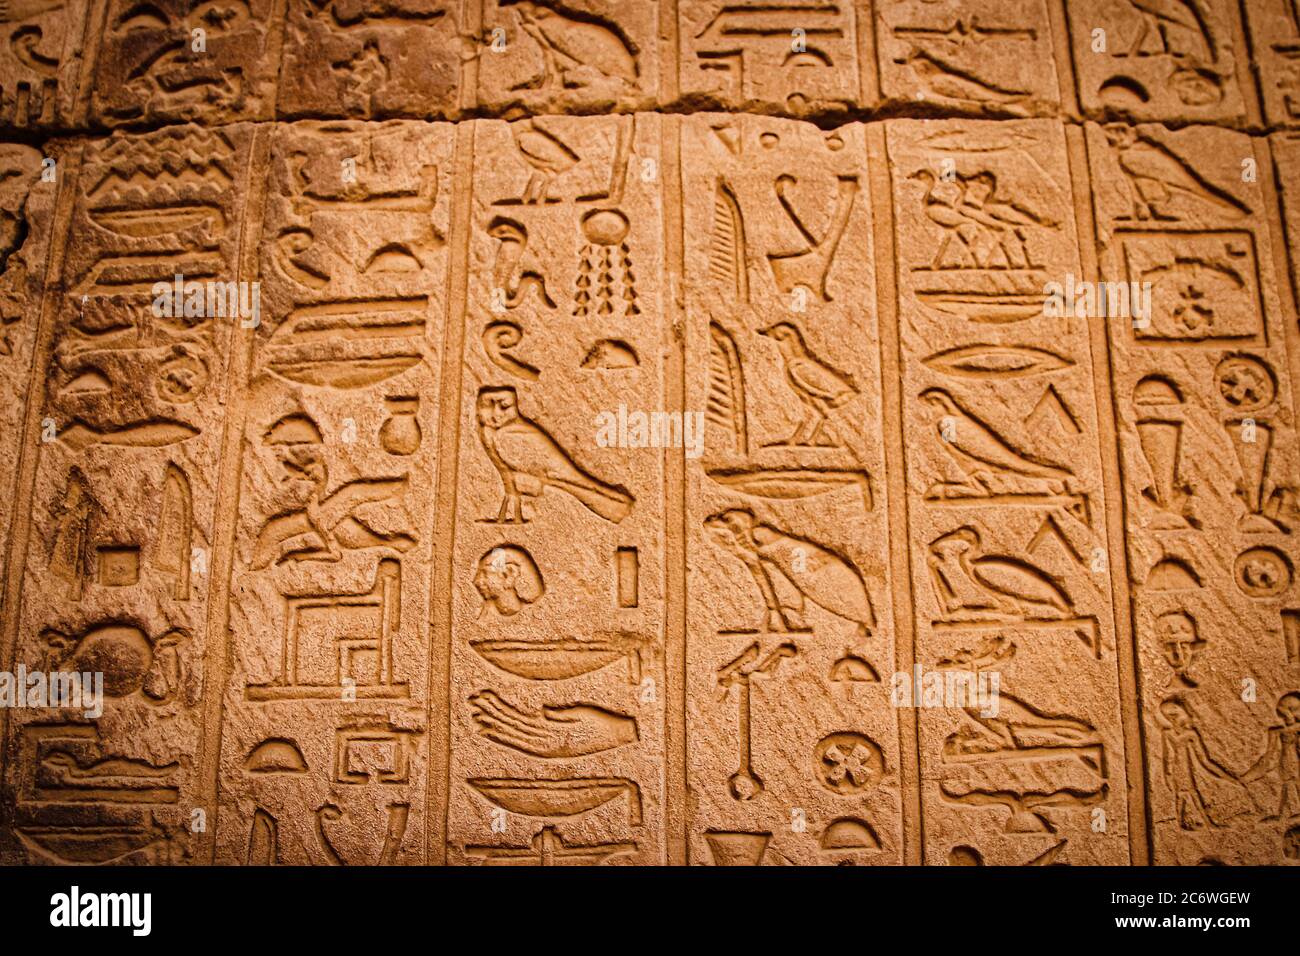 Antica scrittura egiziana, geroglifici egizi. Foto Stock